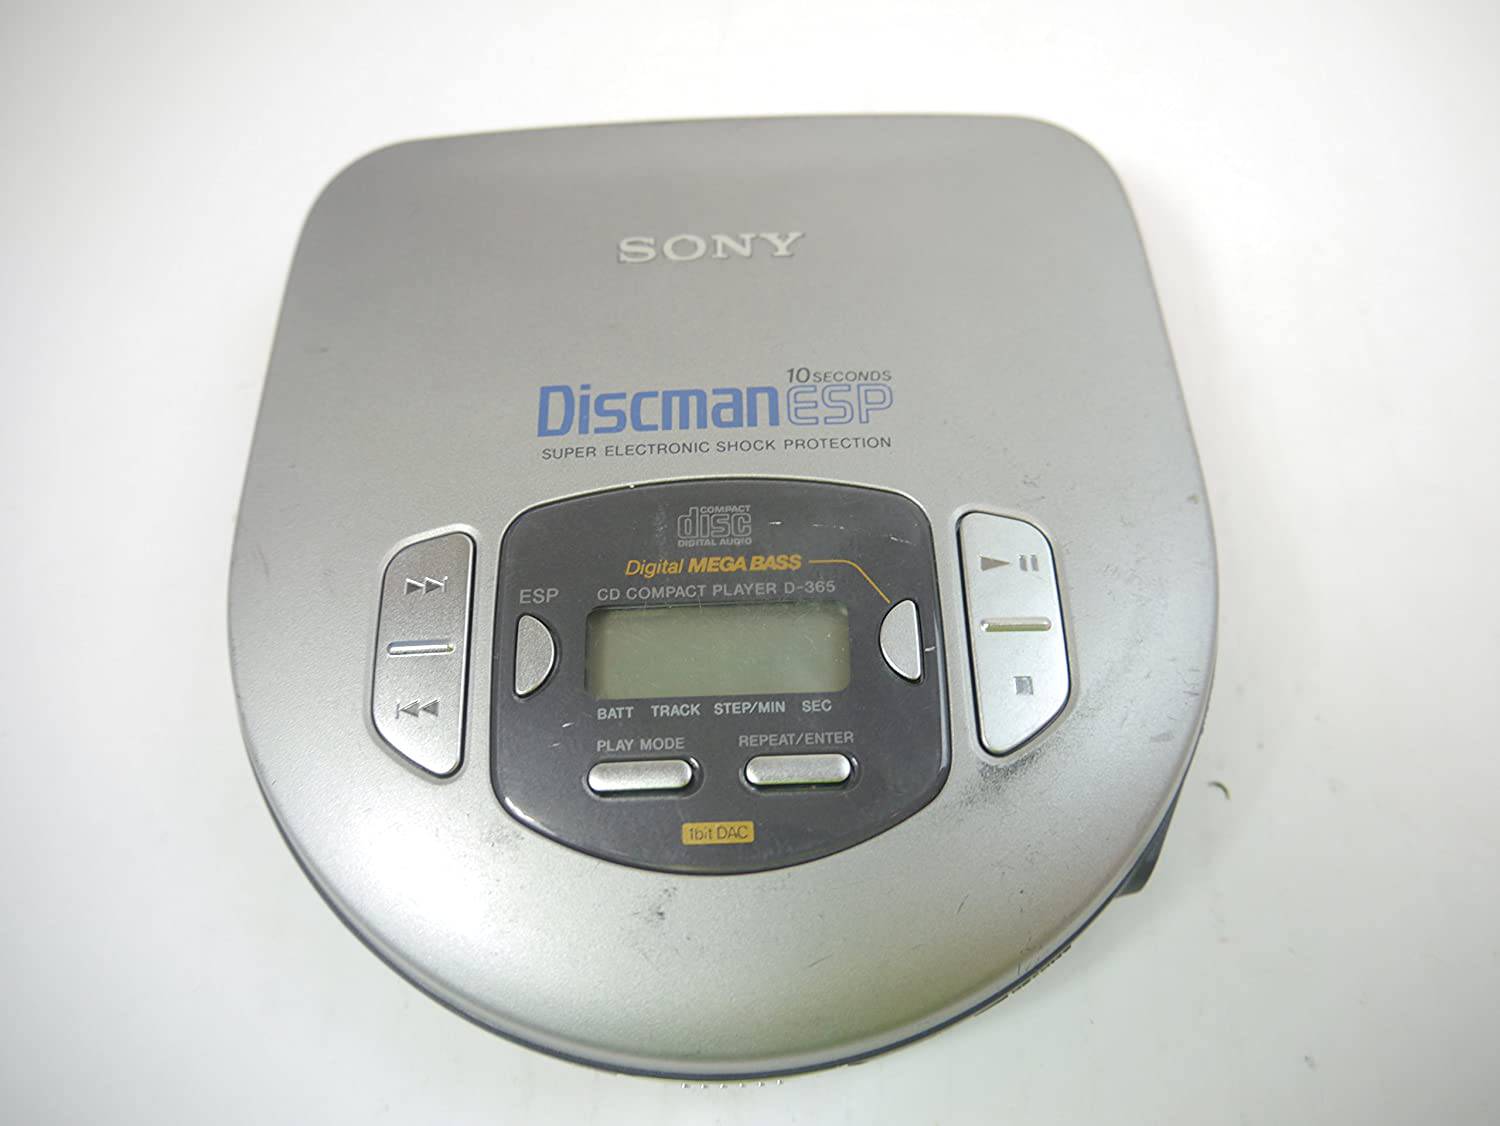 Sony D-365